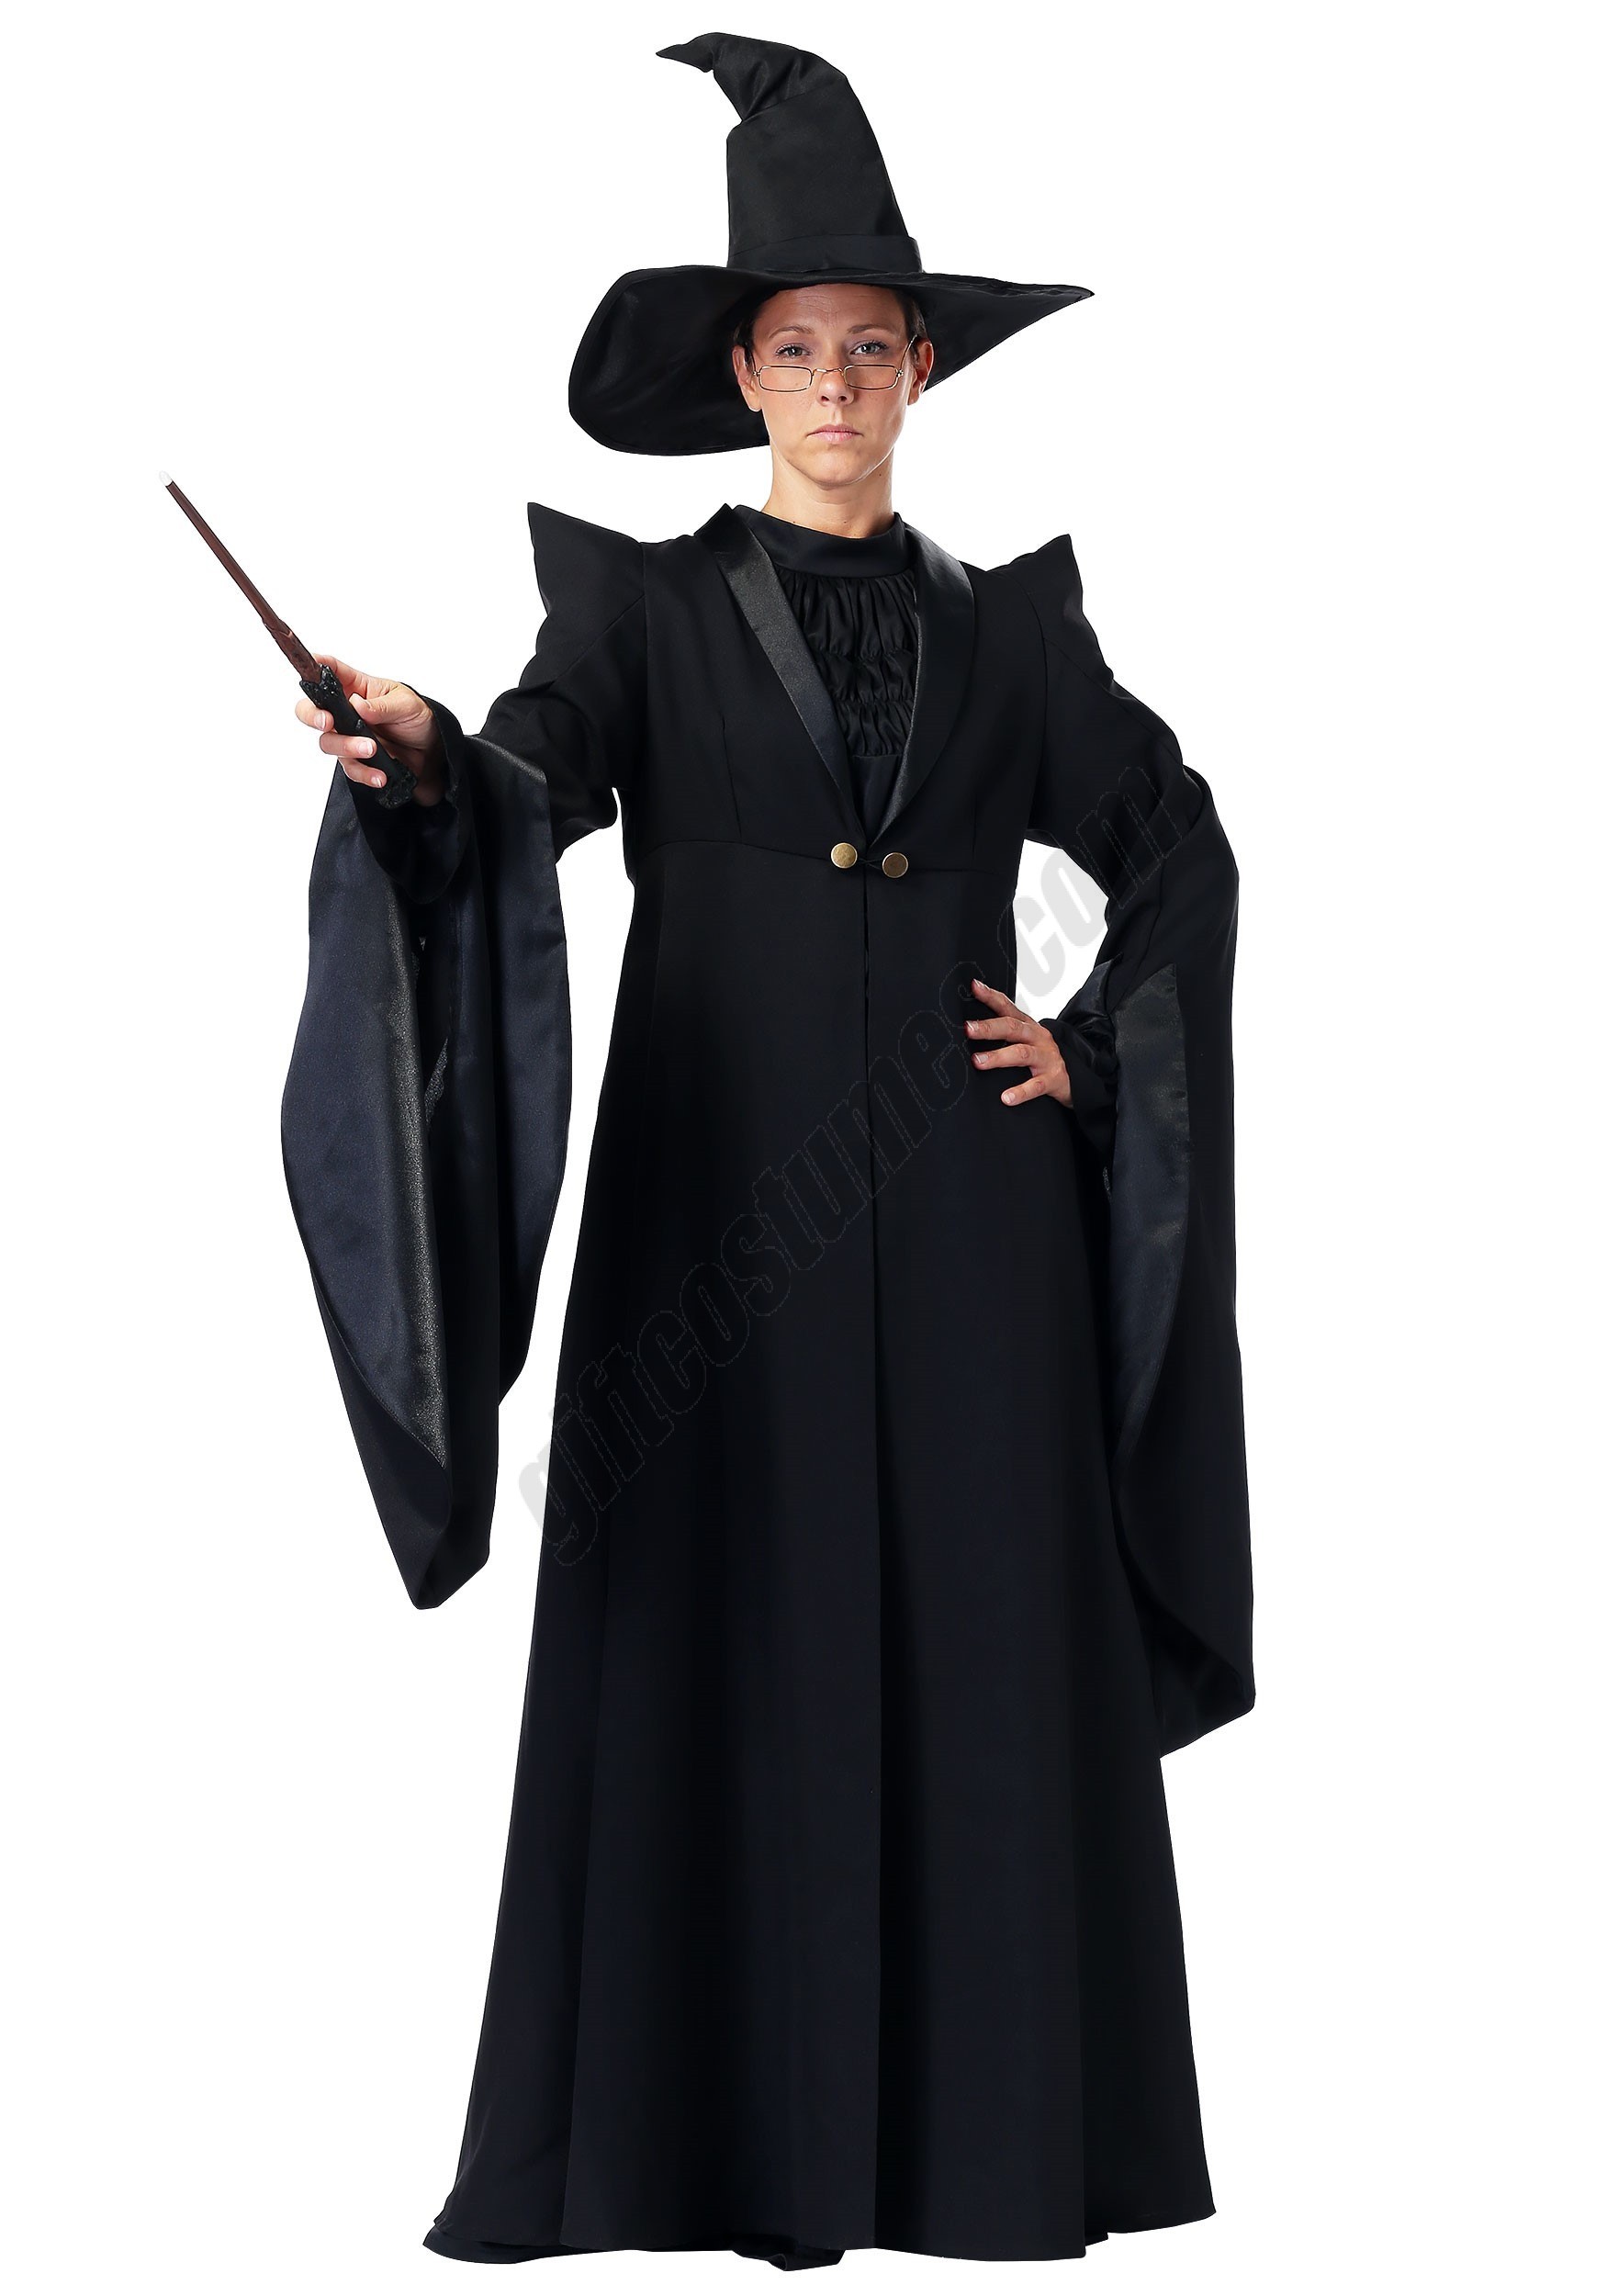 Deluxe Professor McGonagall Adult Costume Promotions - Deluxe Professor McGonagall Adult Costume Promotions